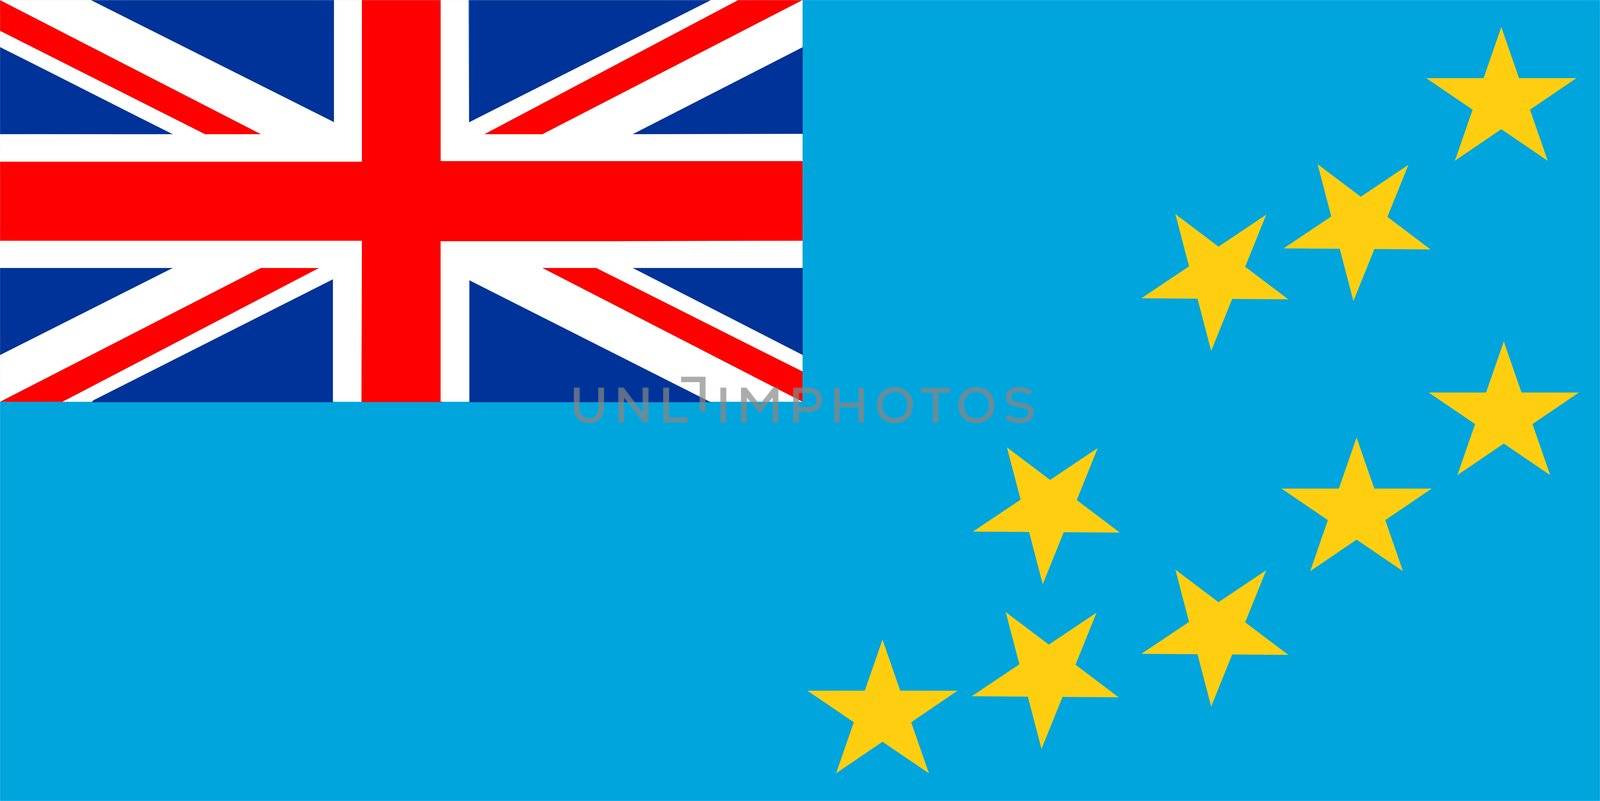 2D illustration of the flag of Tuvalu